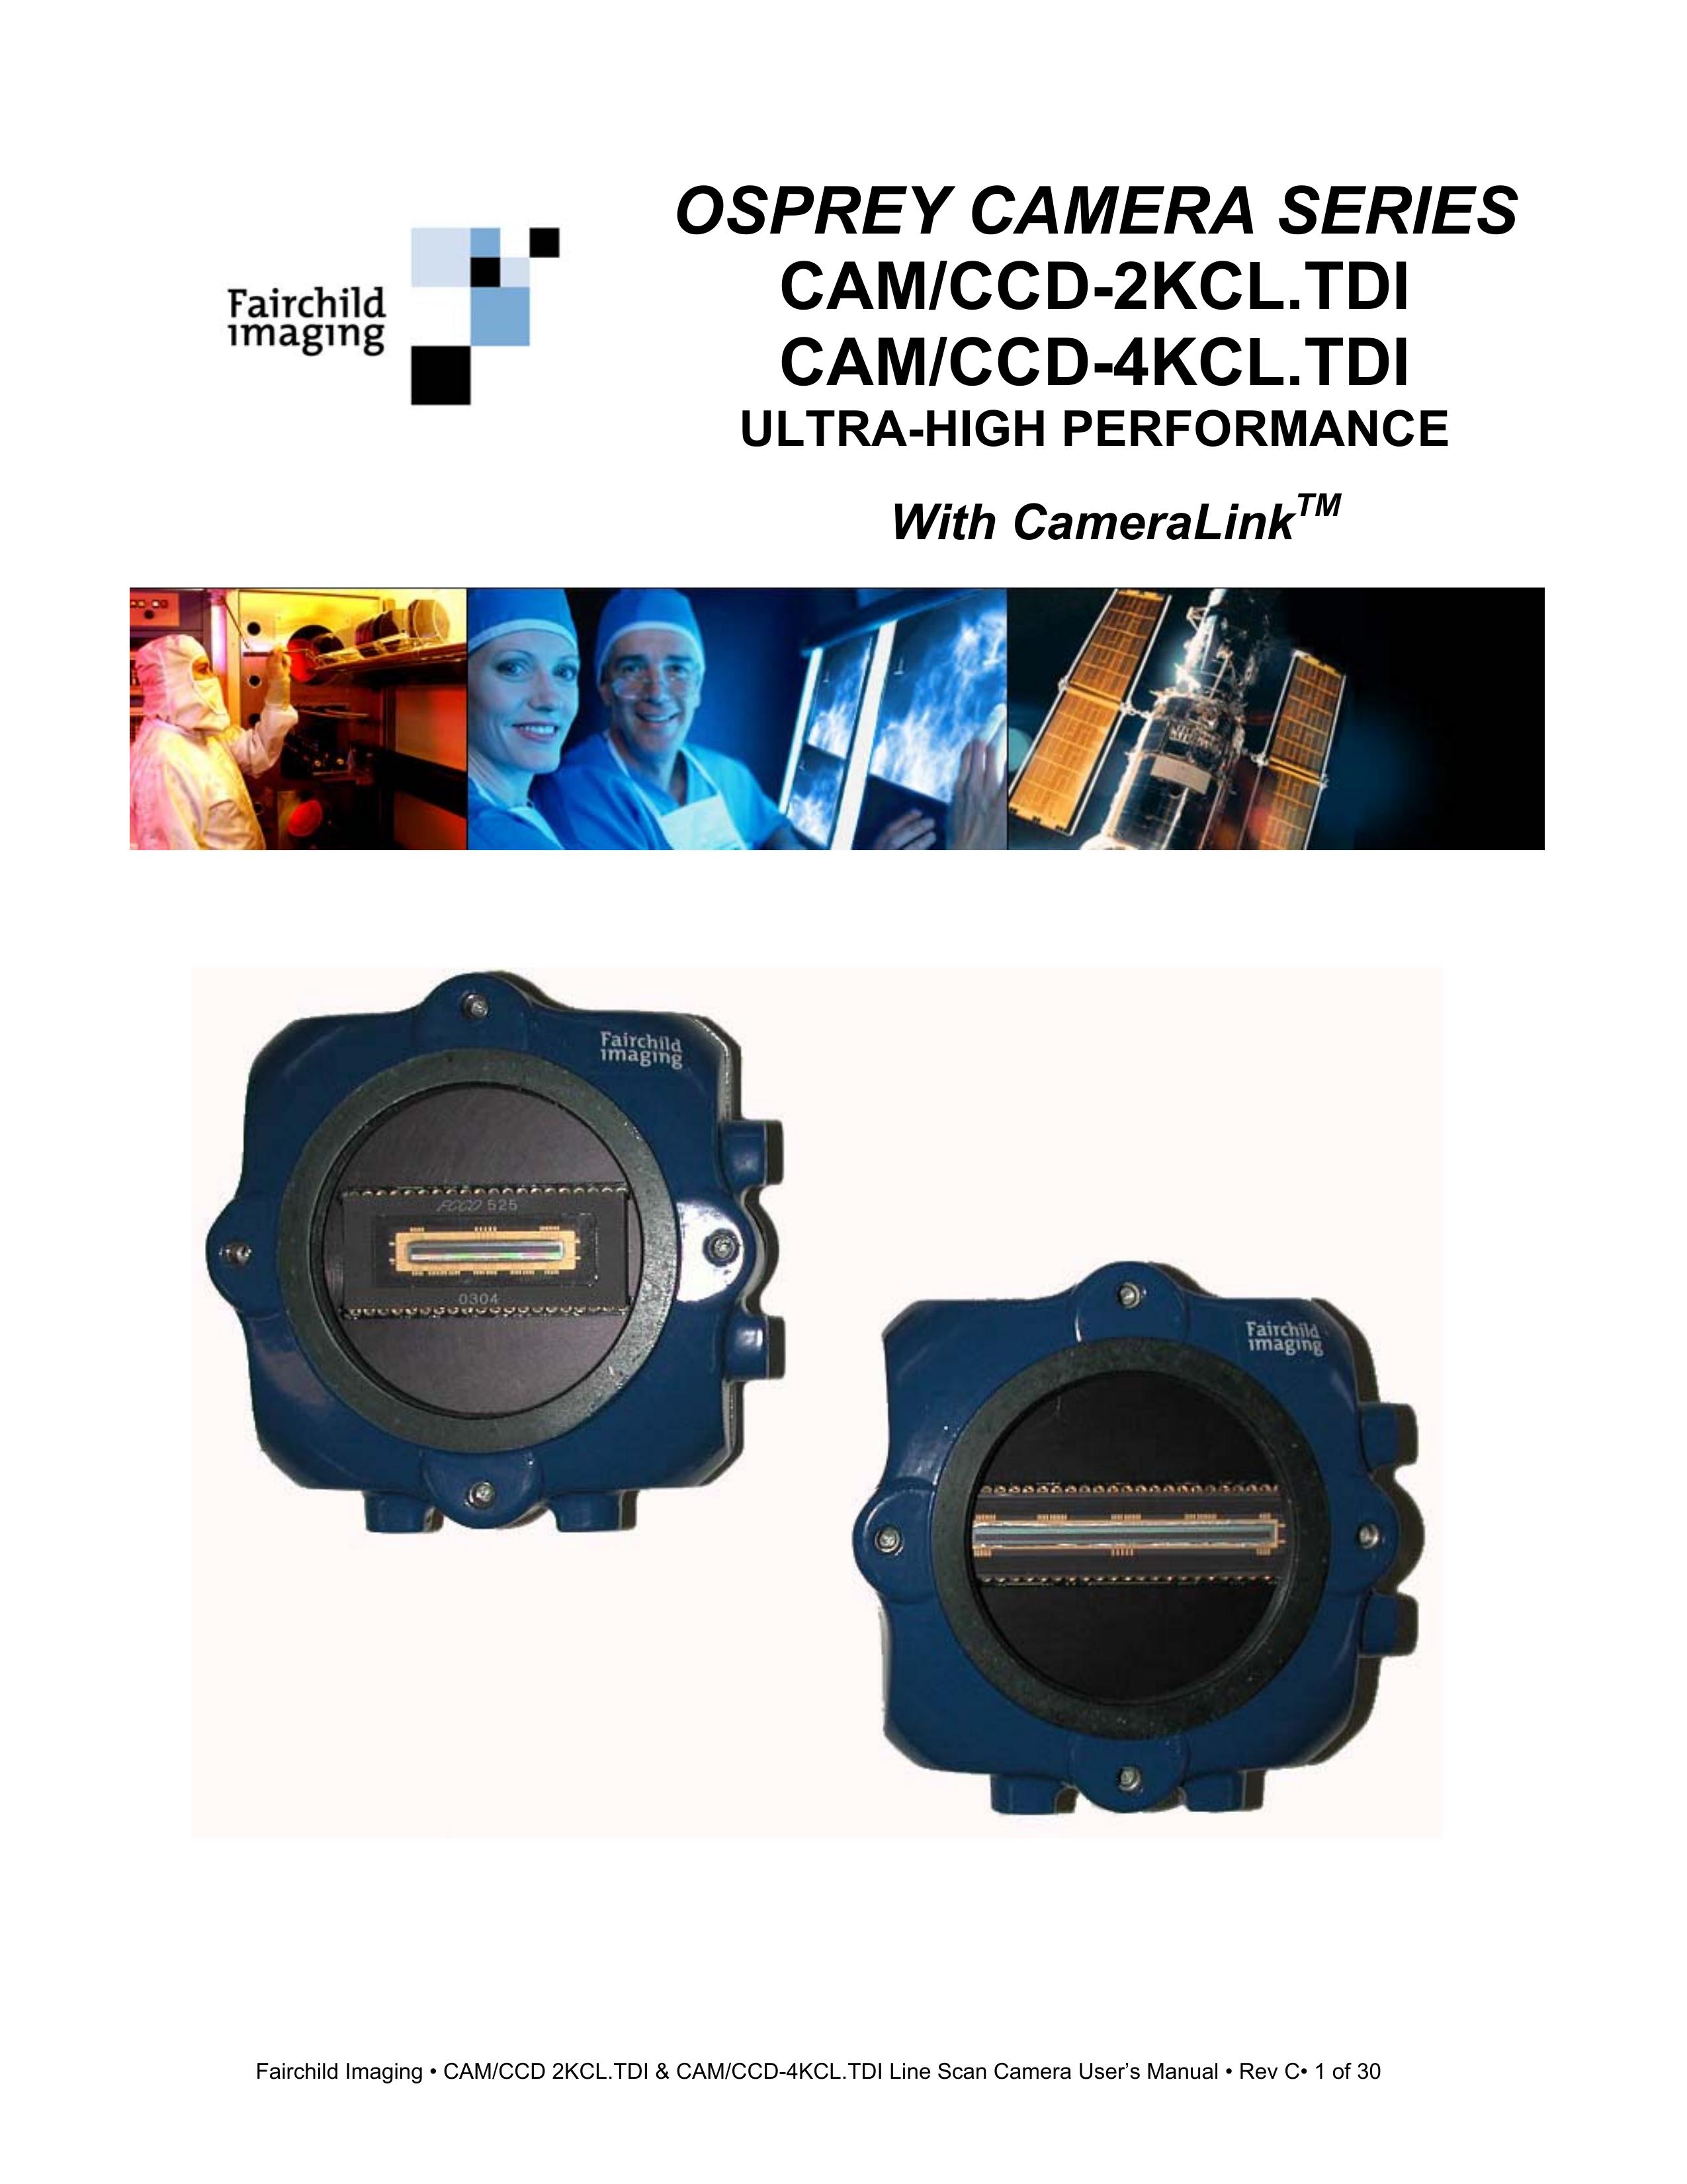 Fairchild CAM/CCD-2KCL.TDI Camera Accessories User Manual